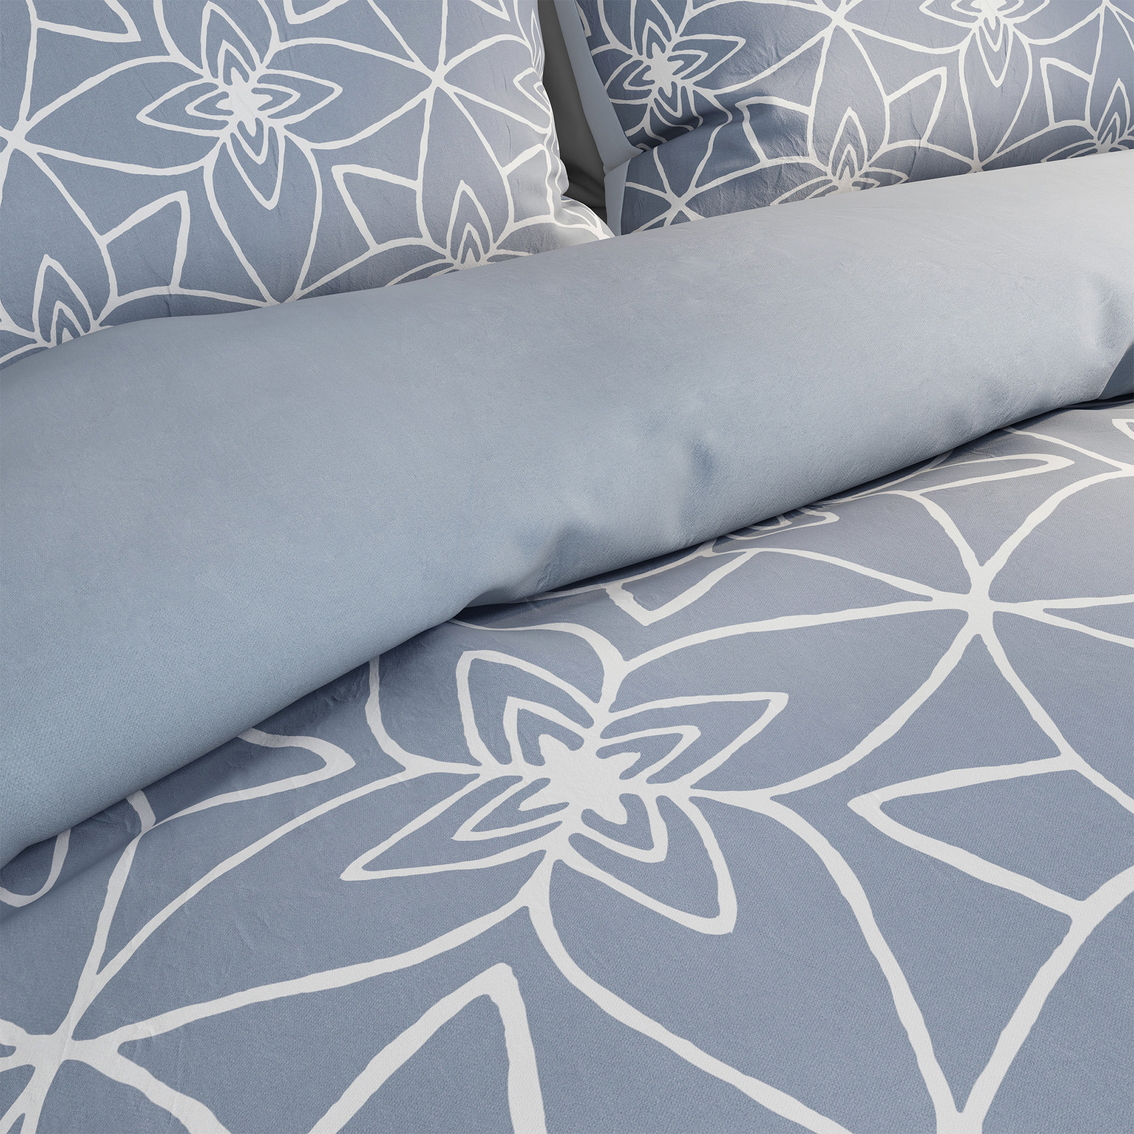 Lavish Home 3 pc. Comforter Set with Exclusive Stargaze Design - Image 5 of 7